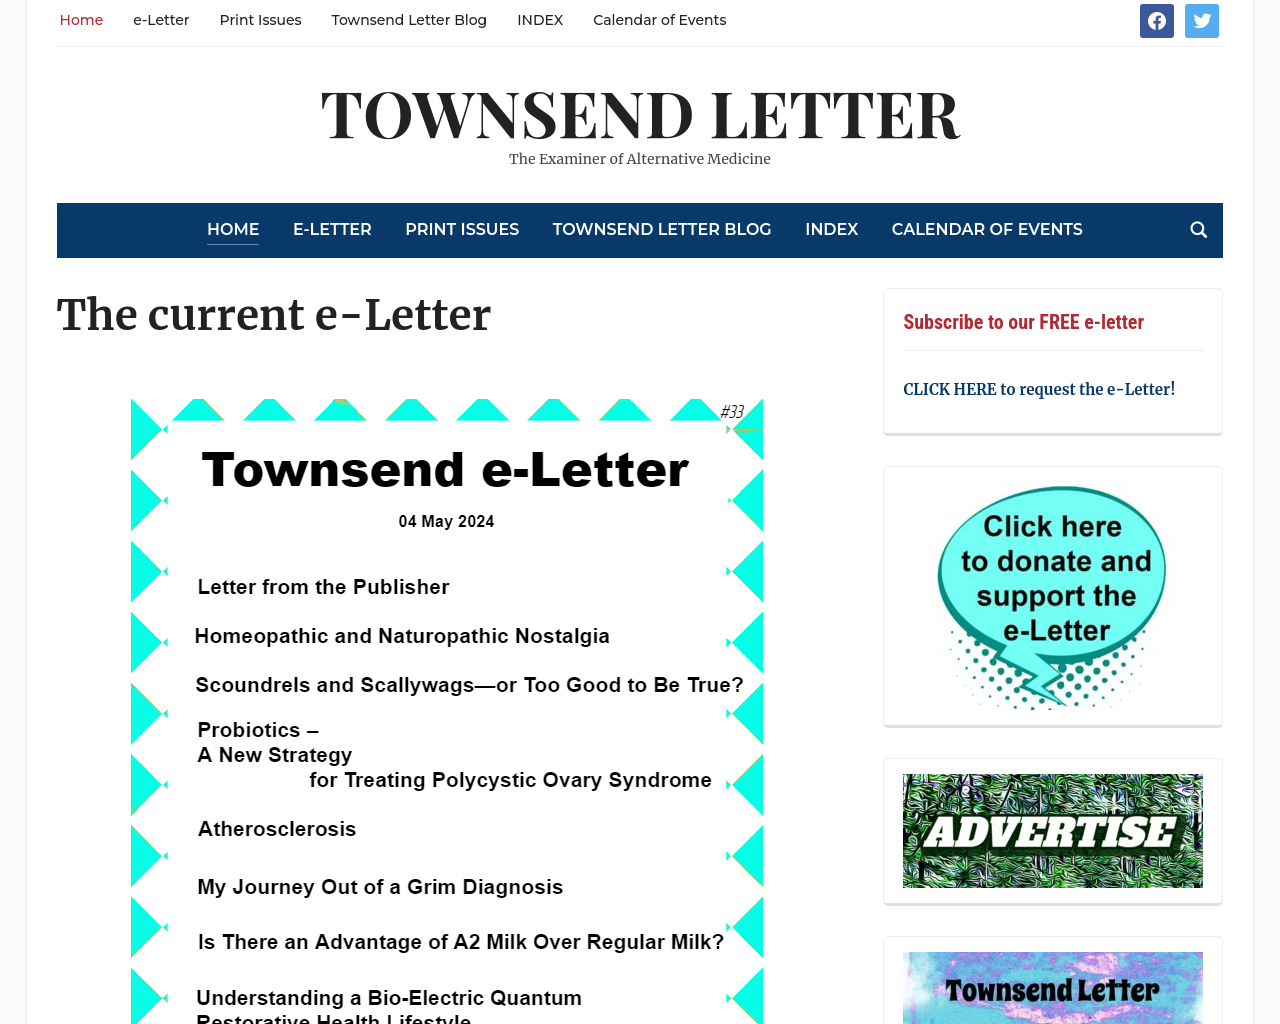 townsendletter.com